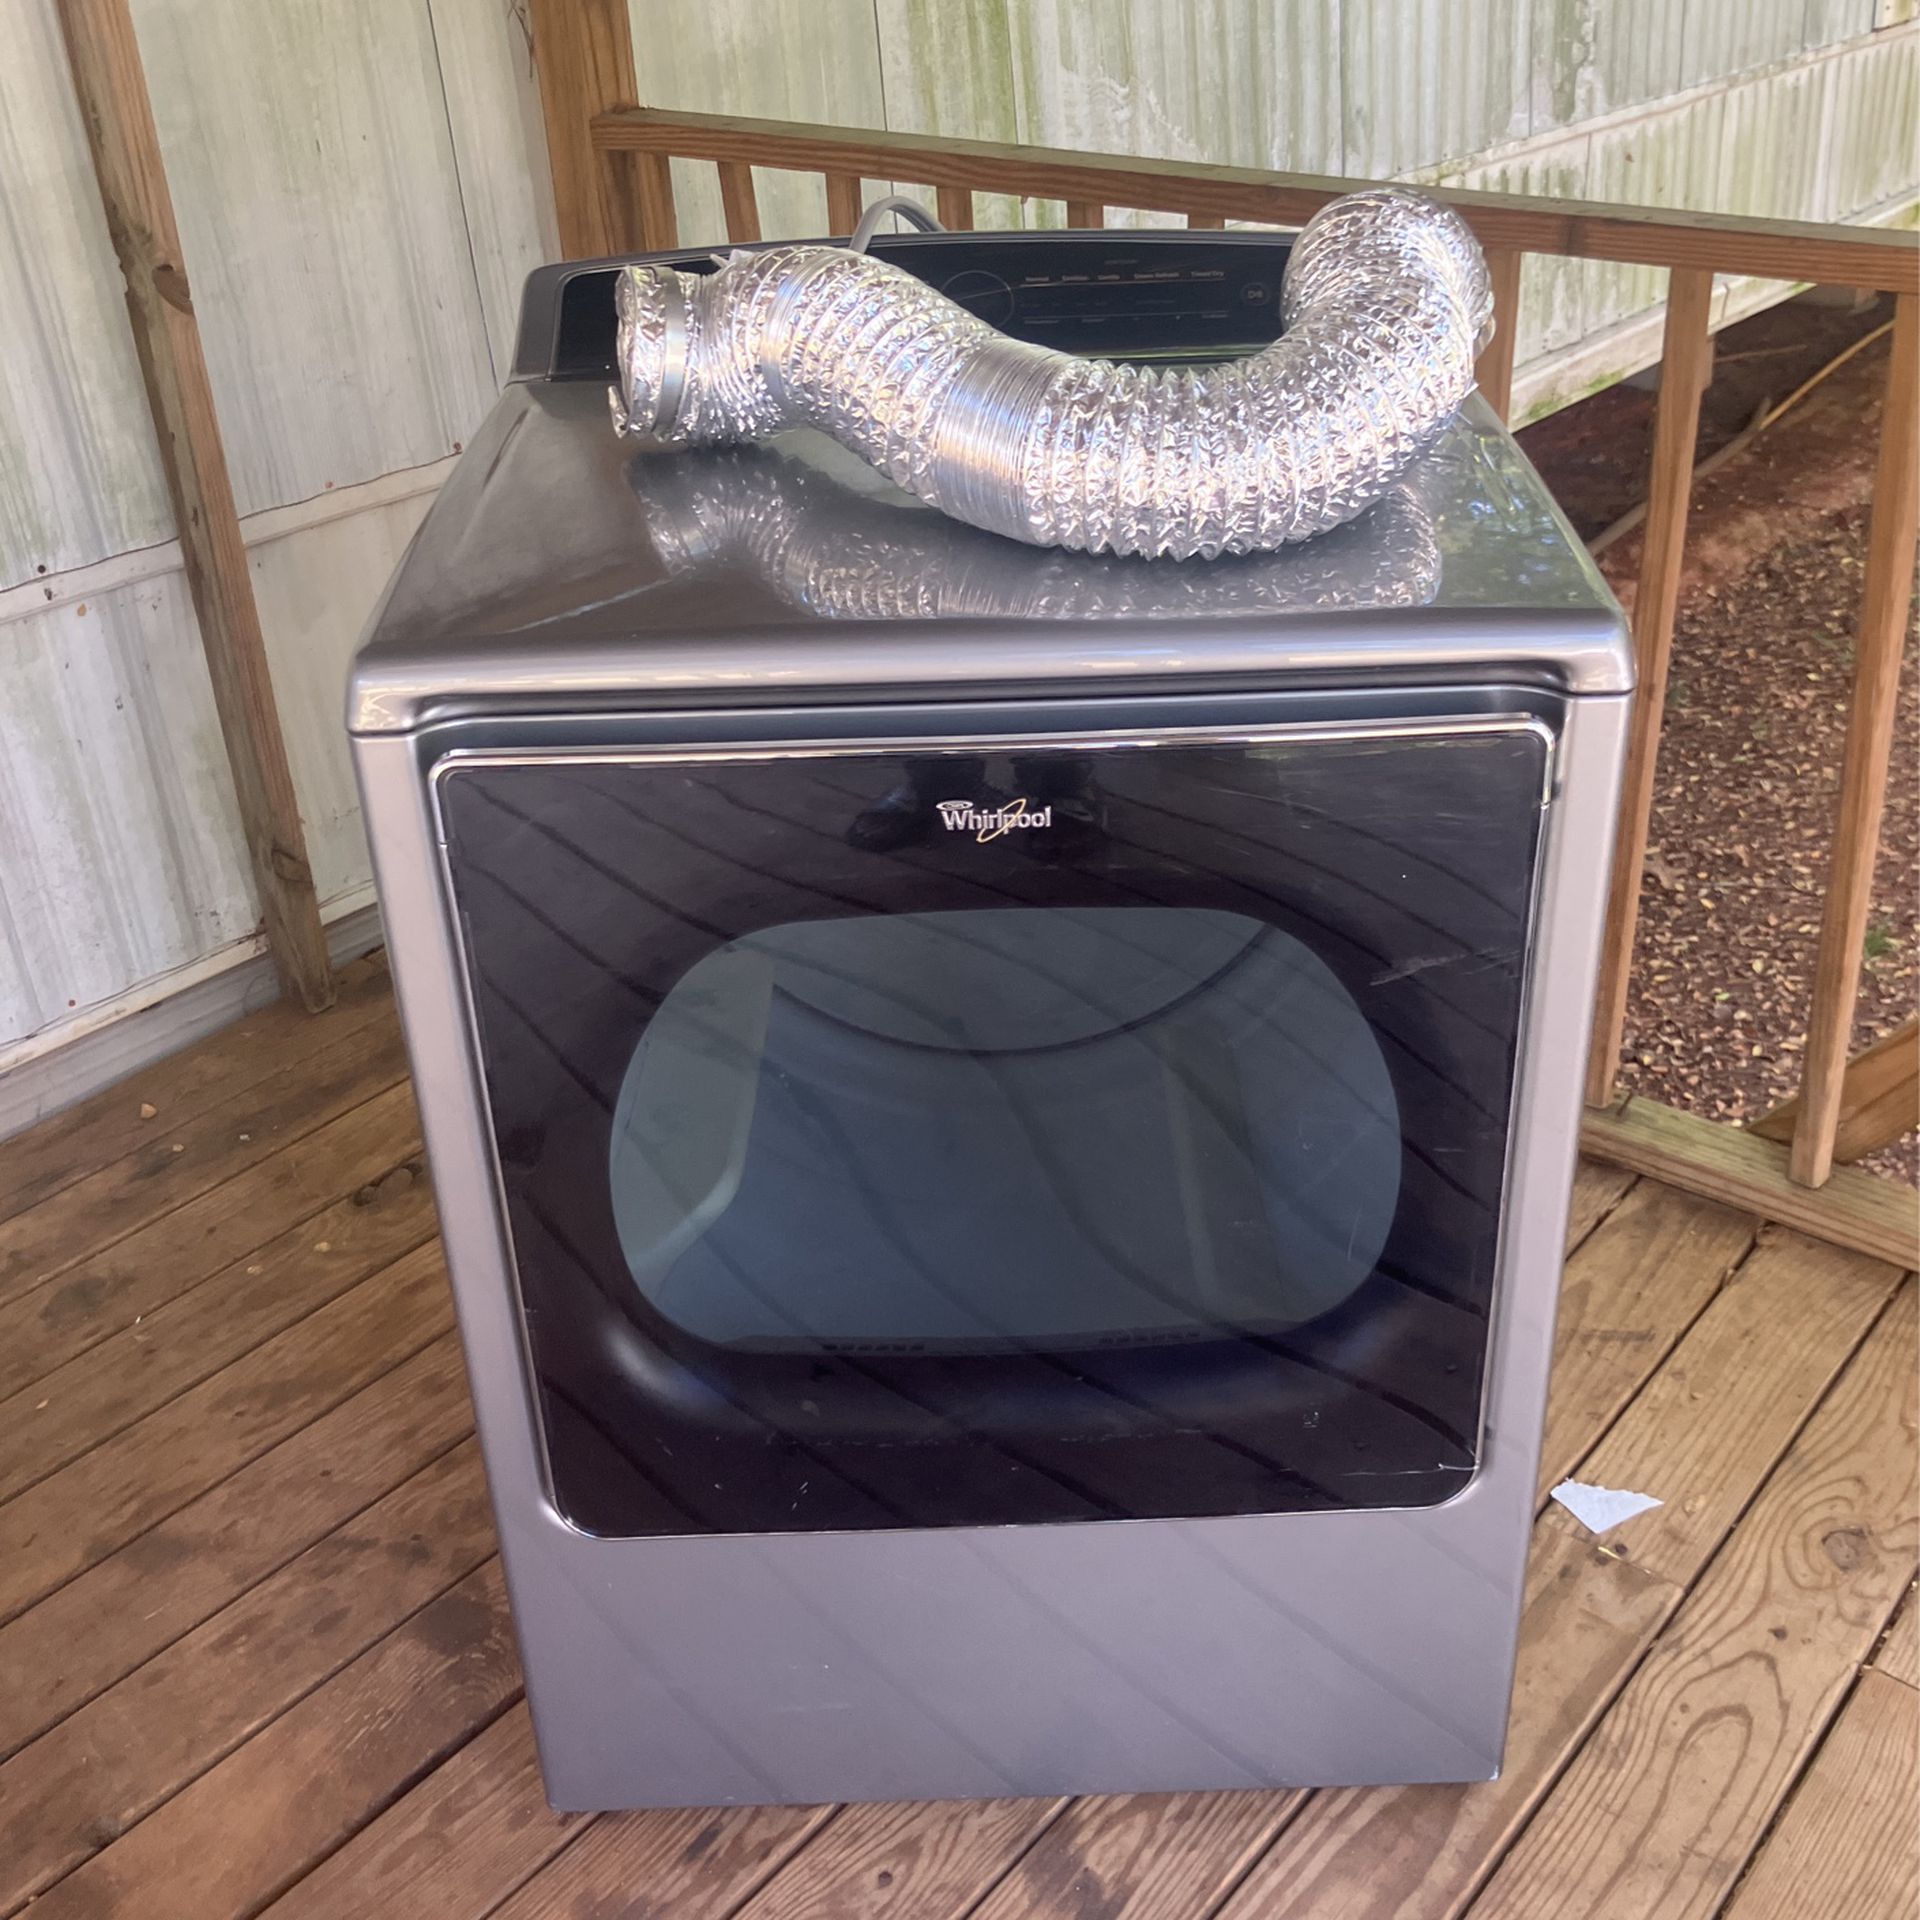  Cabrio whirlpool Dryer 